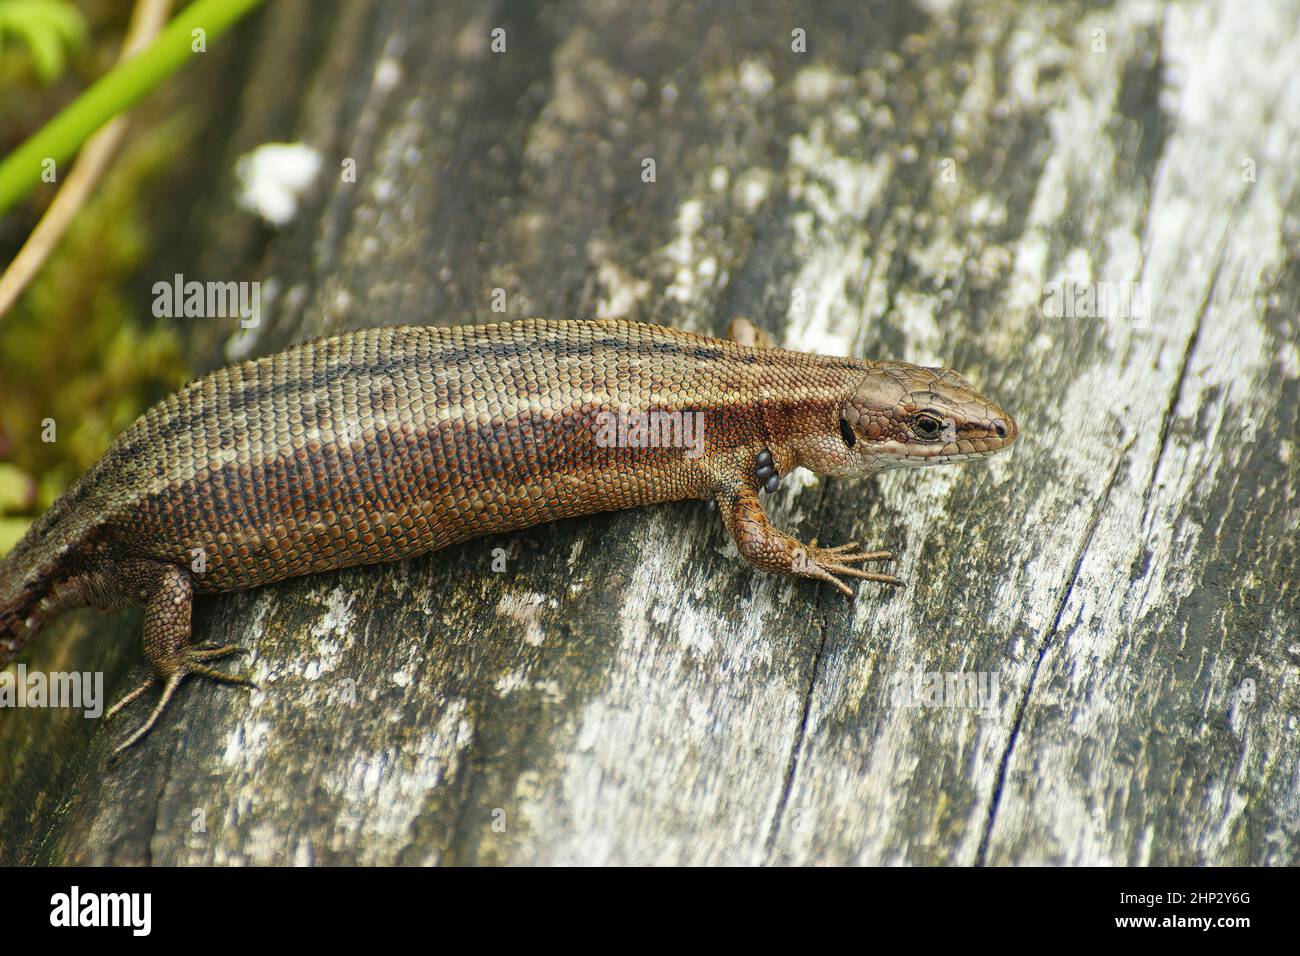 Closeup on a gravid female European live-bearing lizard, Zootoca vivipare, sitting on wood Stock Photo